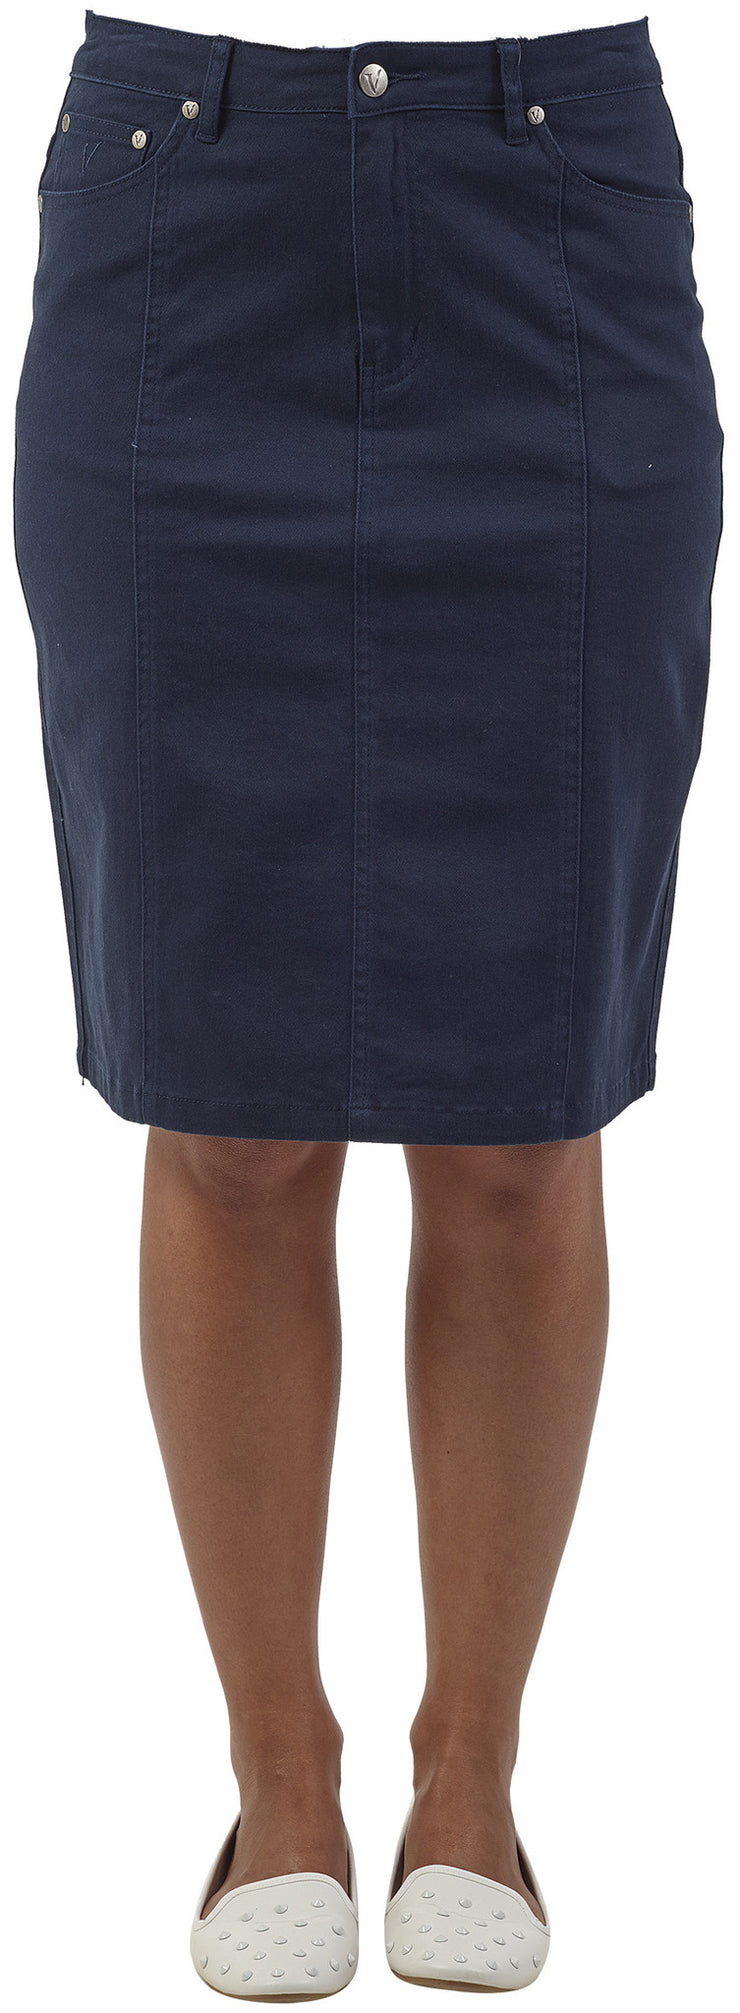 Vassalli Paris Skirt in Luxe